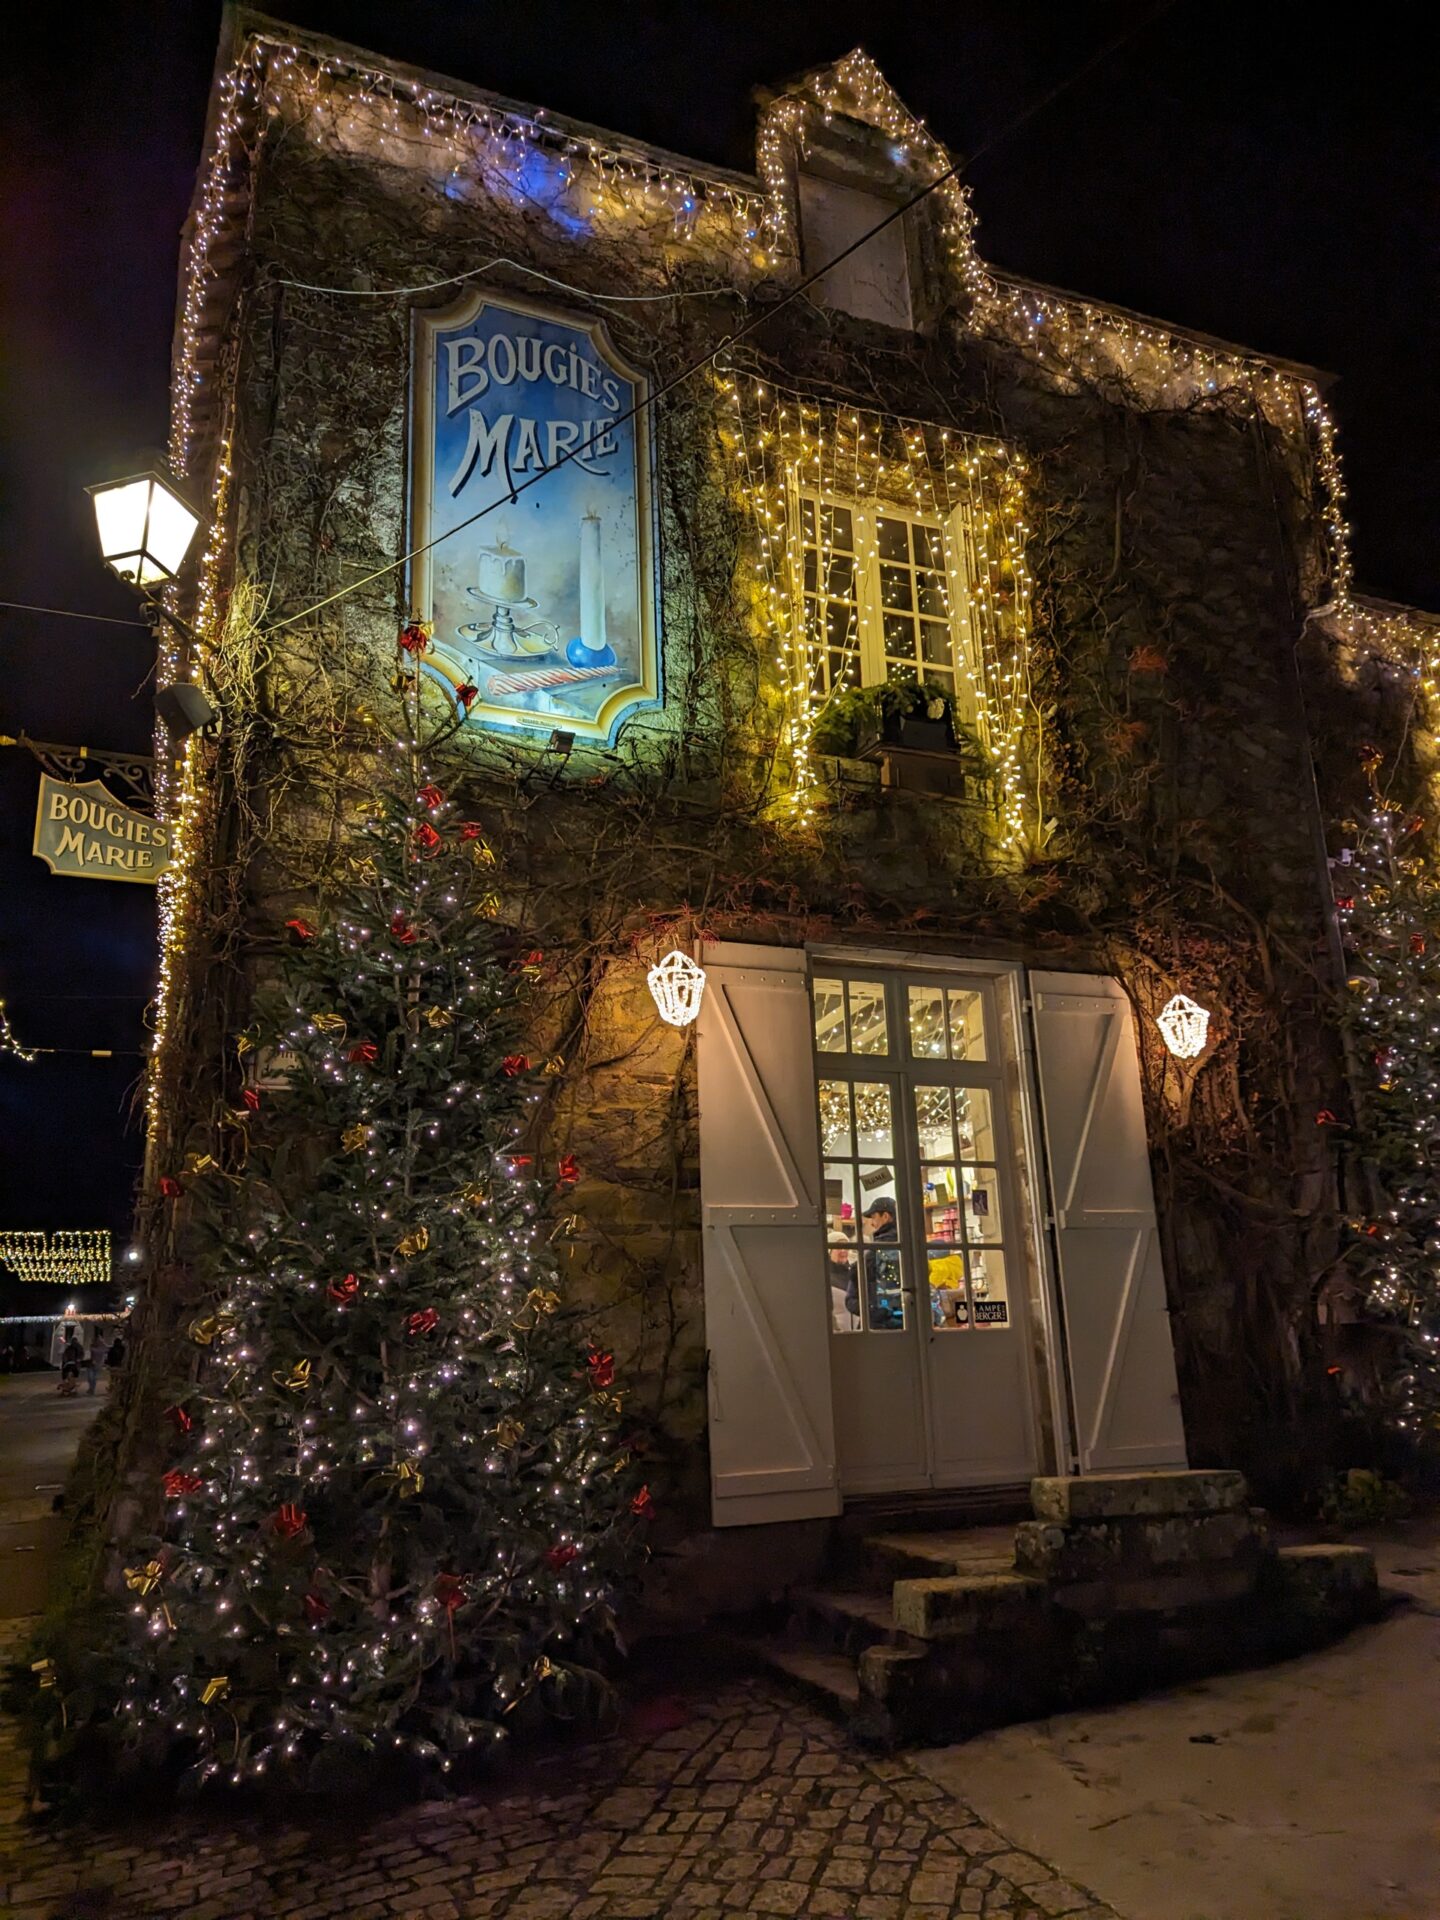 rochefort-en-terre illuminations christmas lights france prettiest village